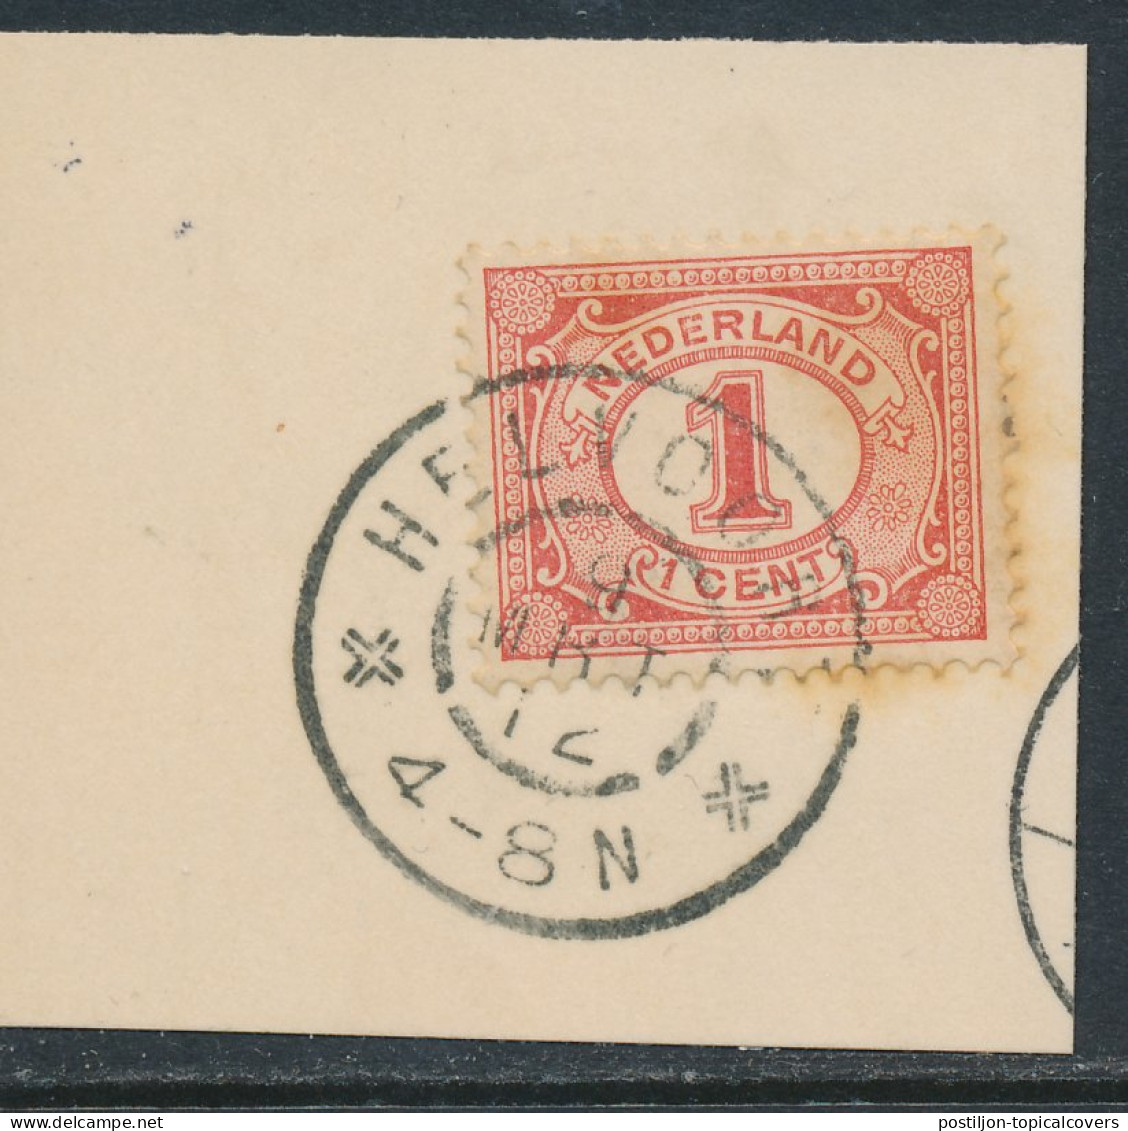 Grootrondstempel Helvoort 1912 - Poststempels/ Marcofilie